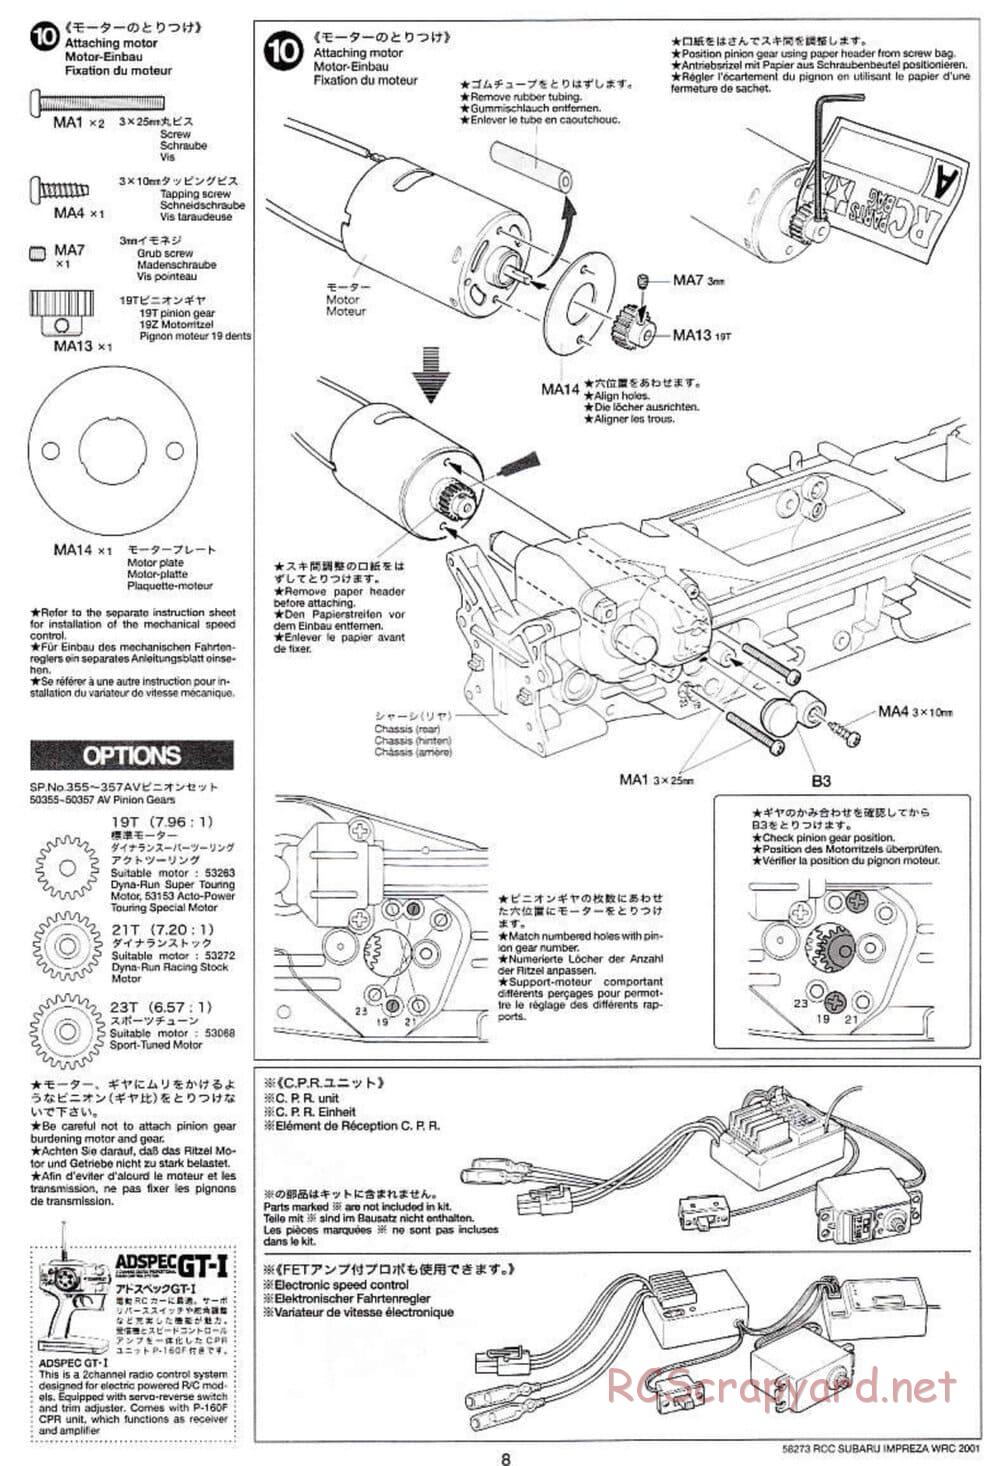 Tamiya - Subaru Impreza WRC 2001 - TL-01 Chassis - Manual - Page 8